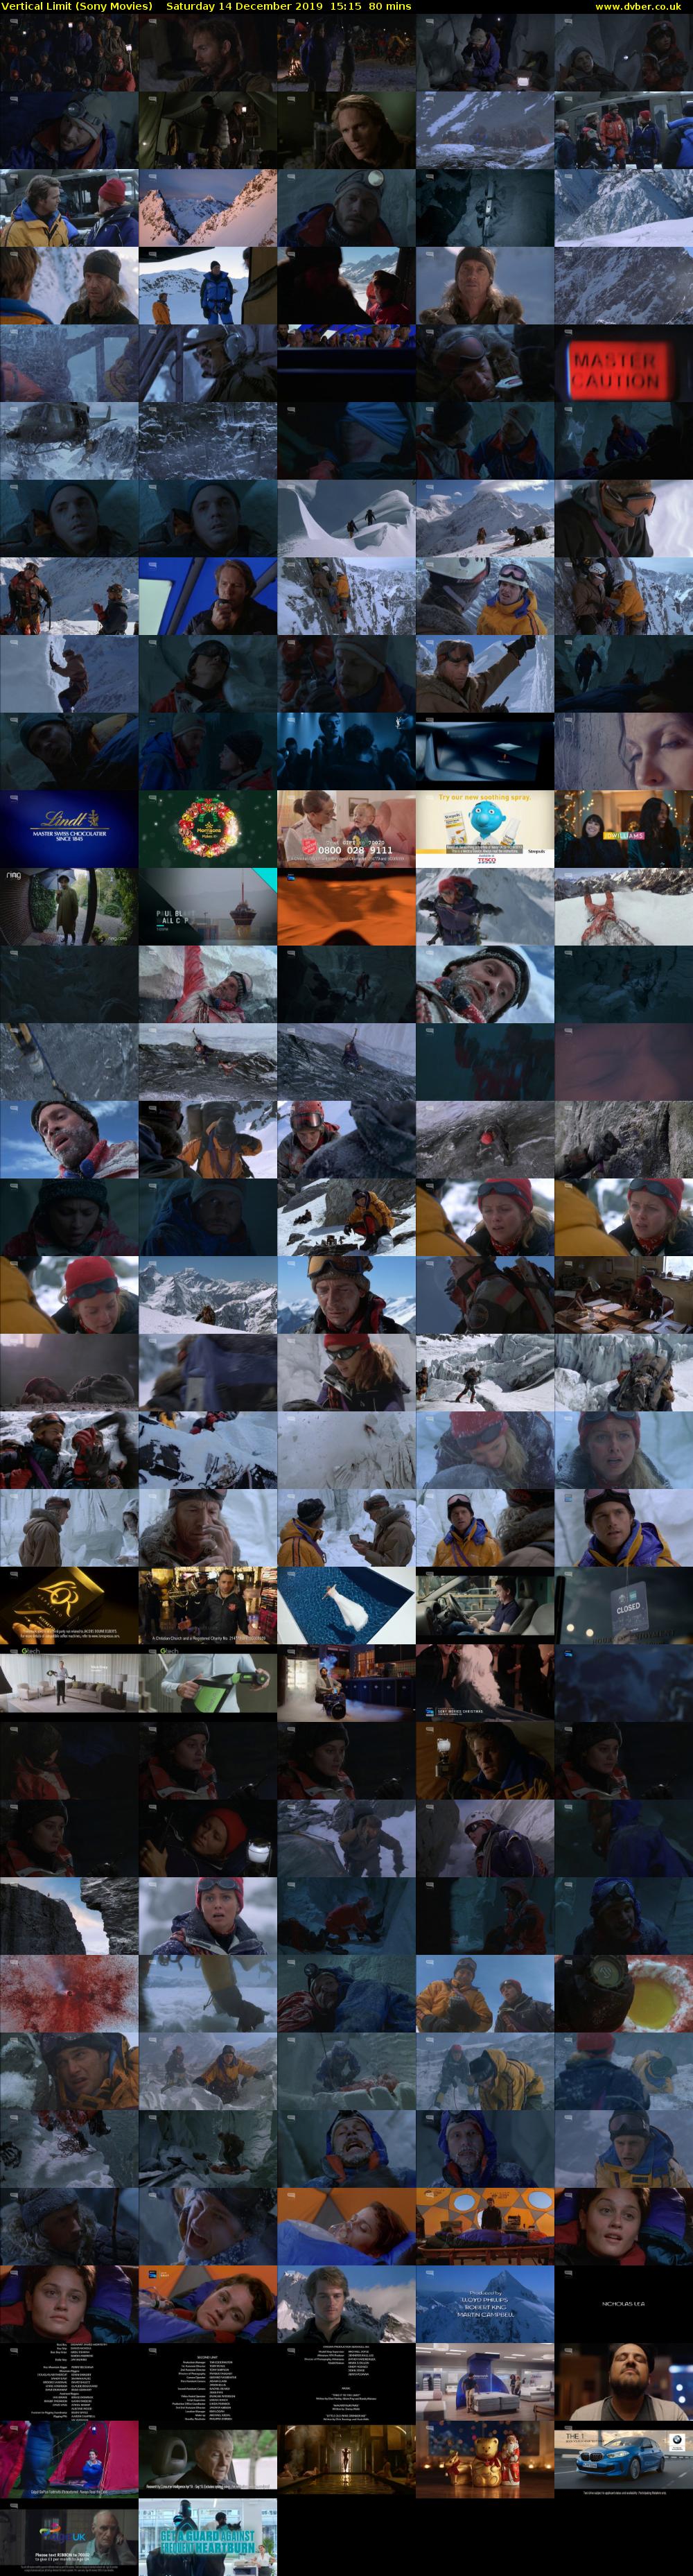 Vertical Limit (Sony Movies) Saturday 14 December 2019 15:15 - 16:35